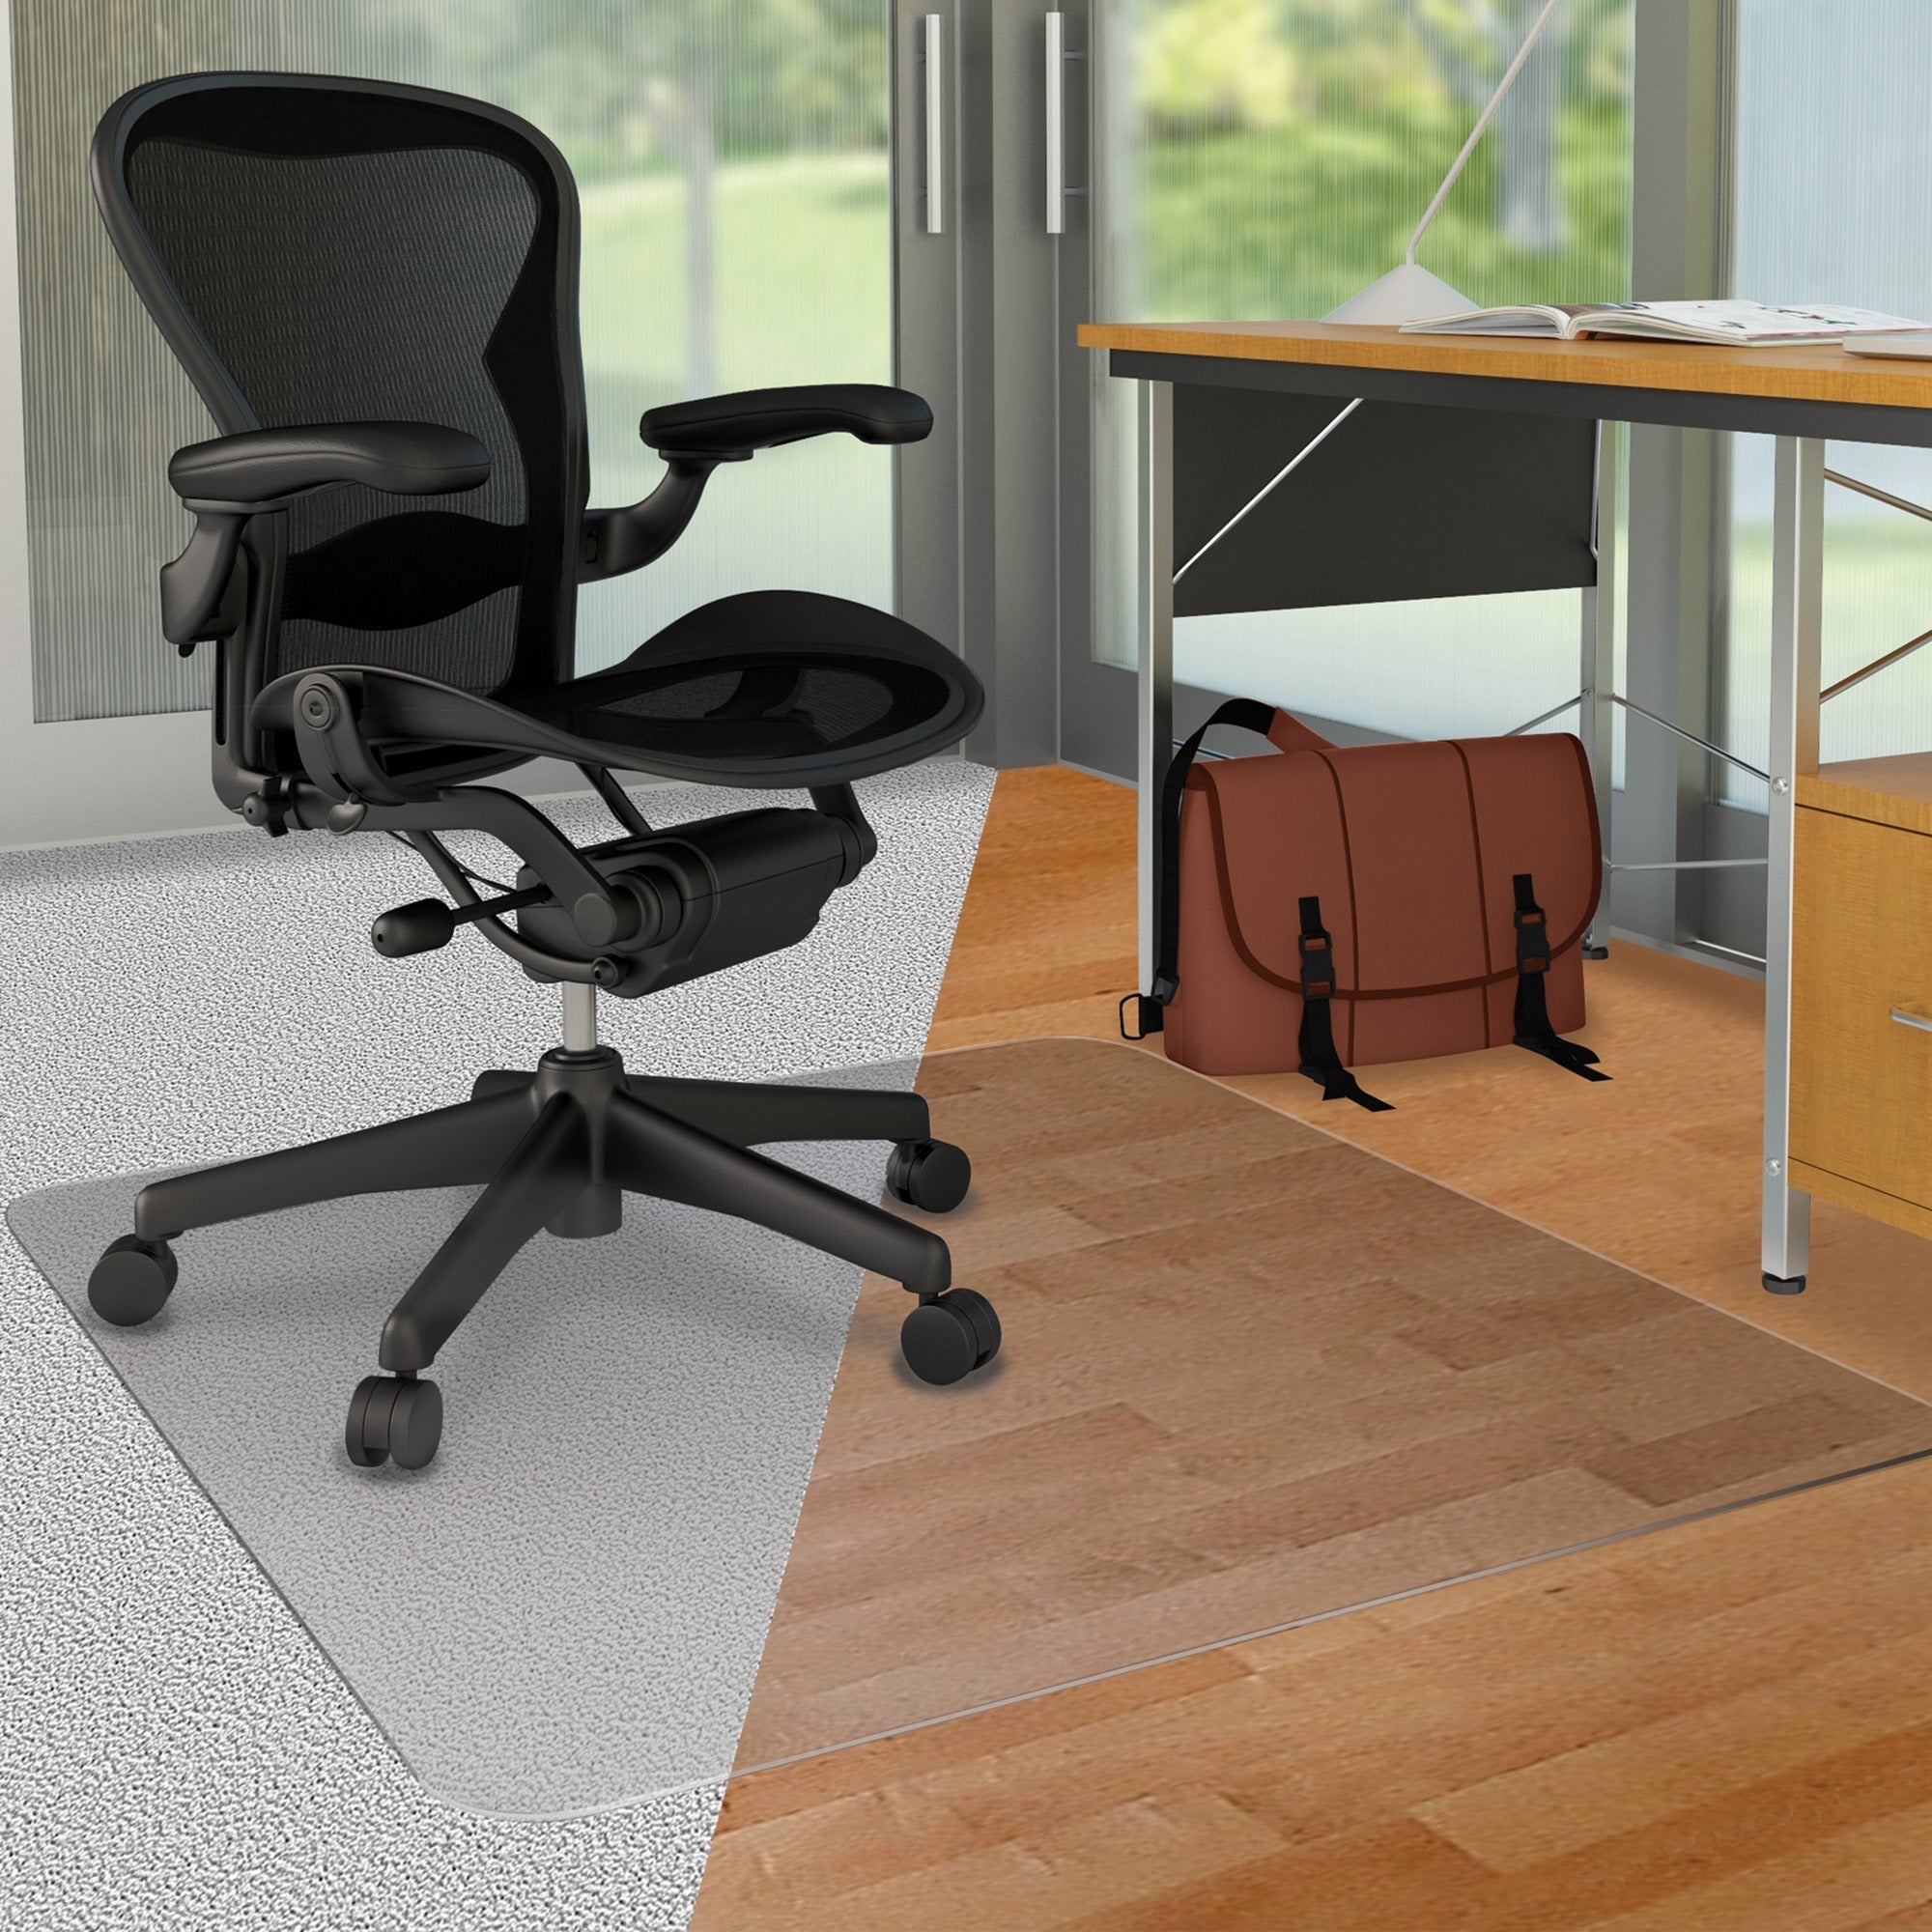 deflecto-duomat-multi-surface-chairmat-carpet-hard-floor-53-length-x-45-width-lip-size-25-length-x-12-width-rectangular-classic-clear-1each_defcm23232duo - 1